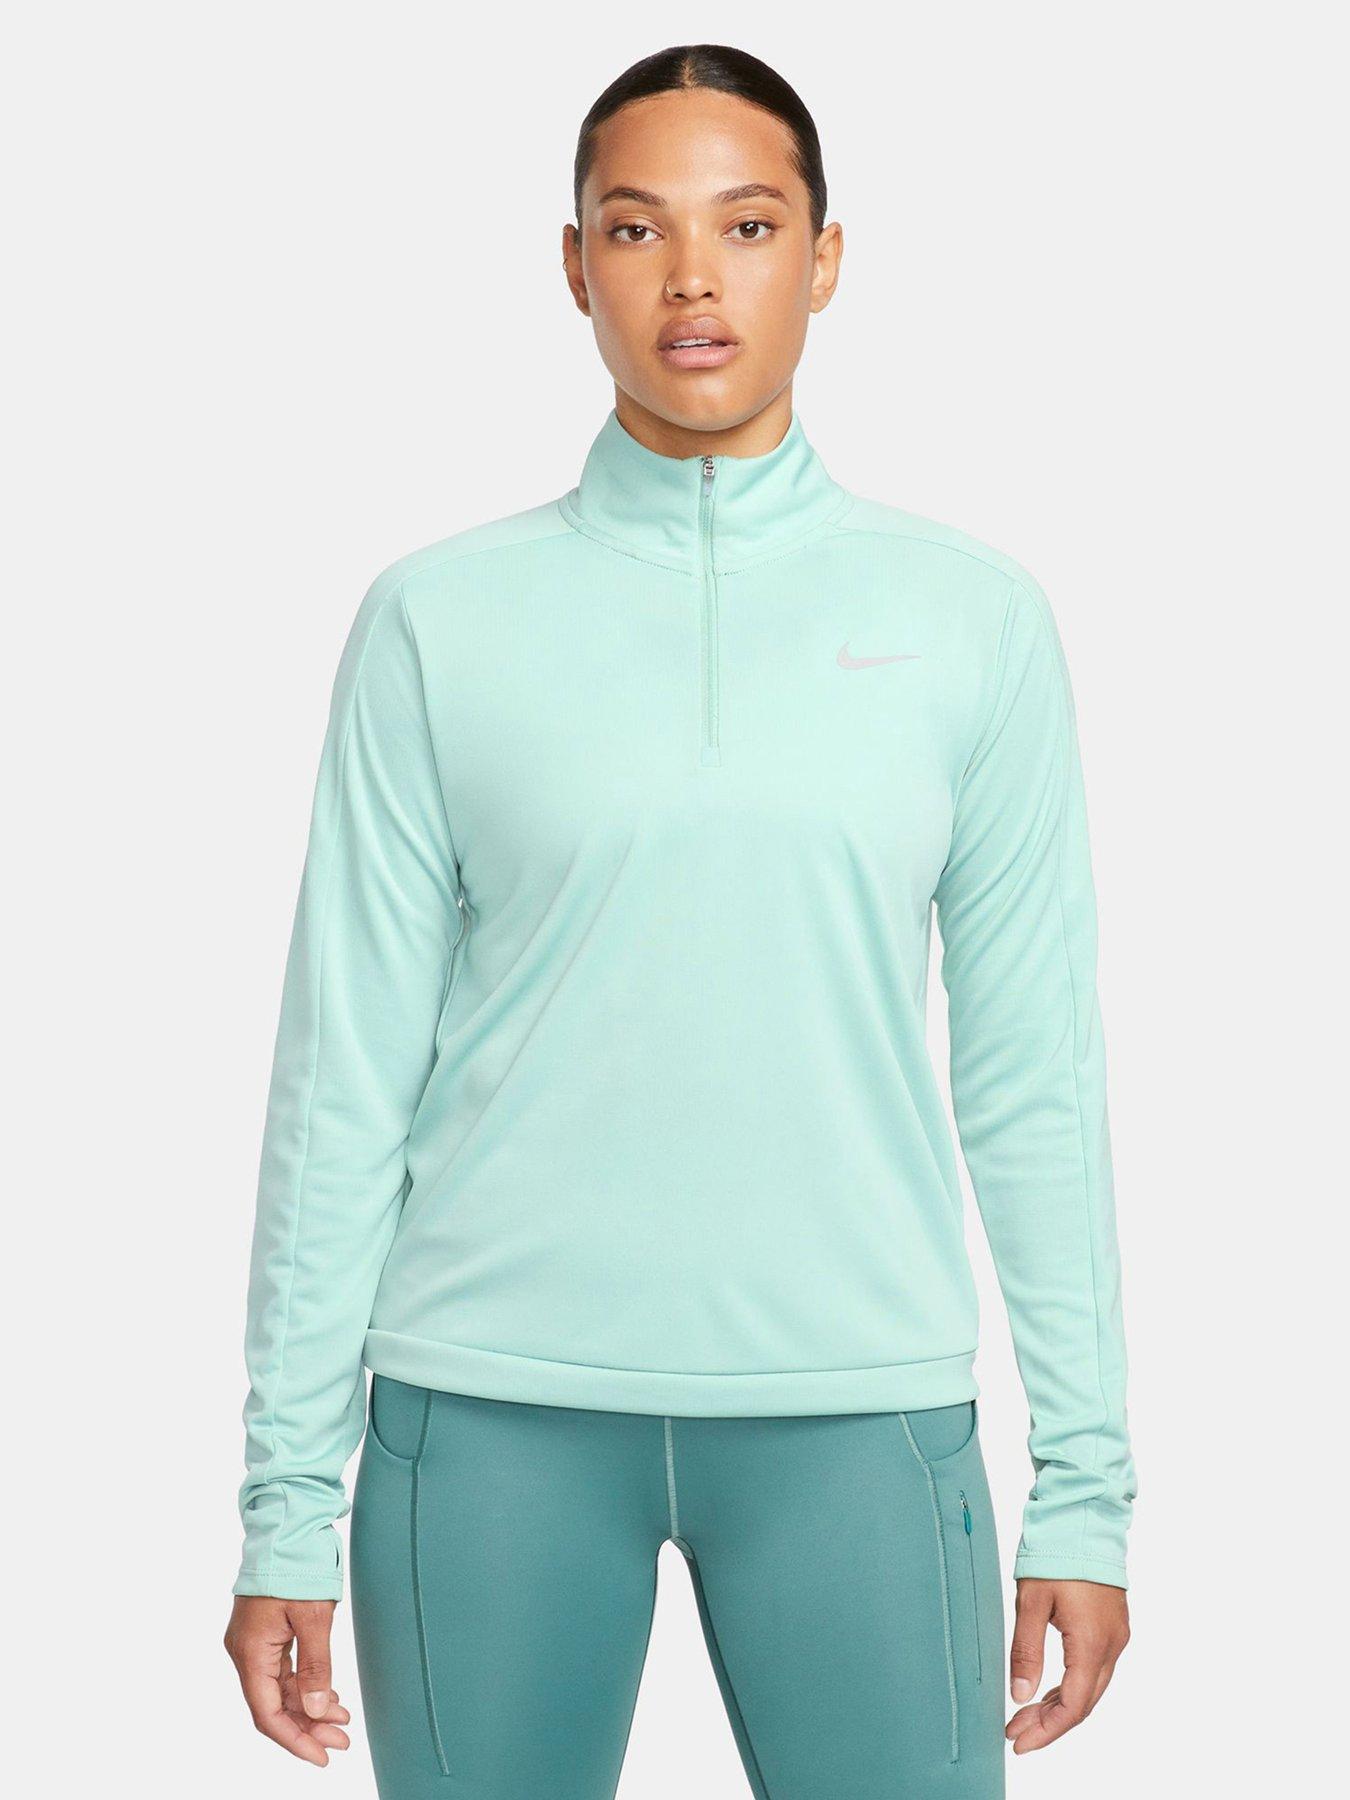 Nike, Tops, Nike Womensdrifit 34 Sleeves Yoga Shirt Size S